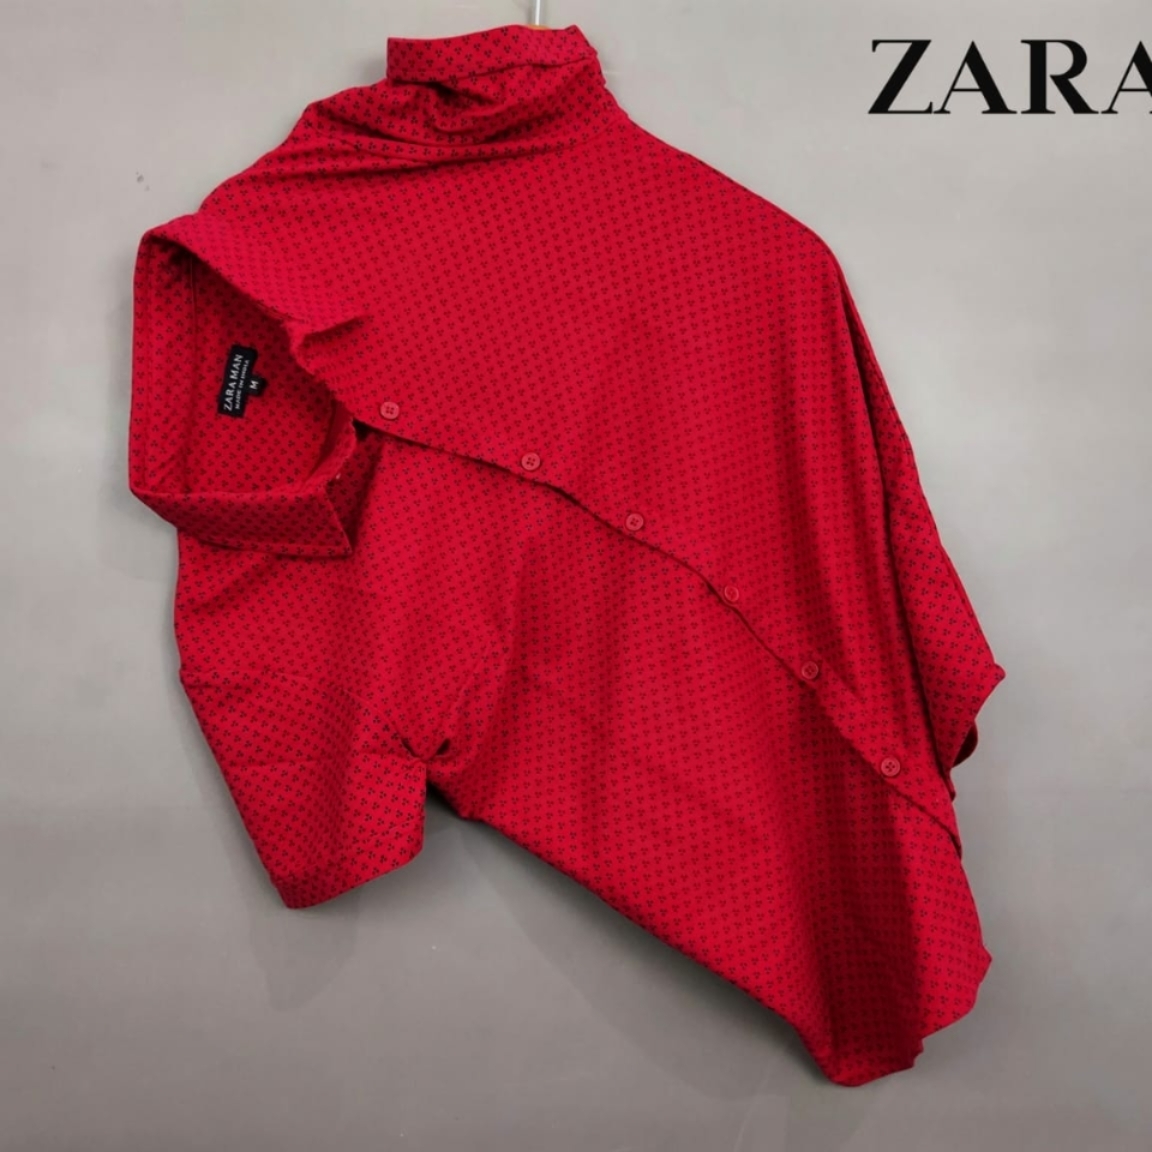 Zara superior quality front button polo tshirt